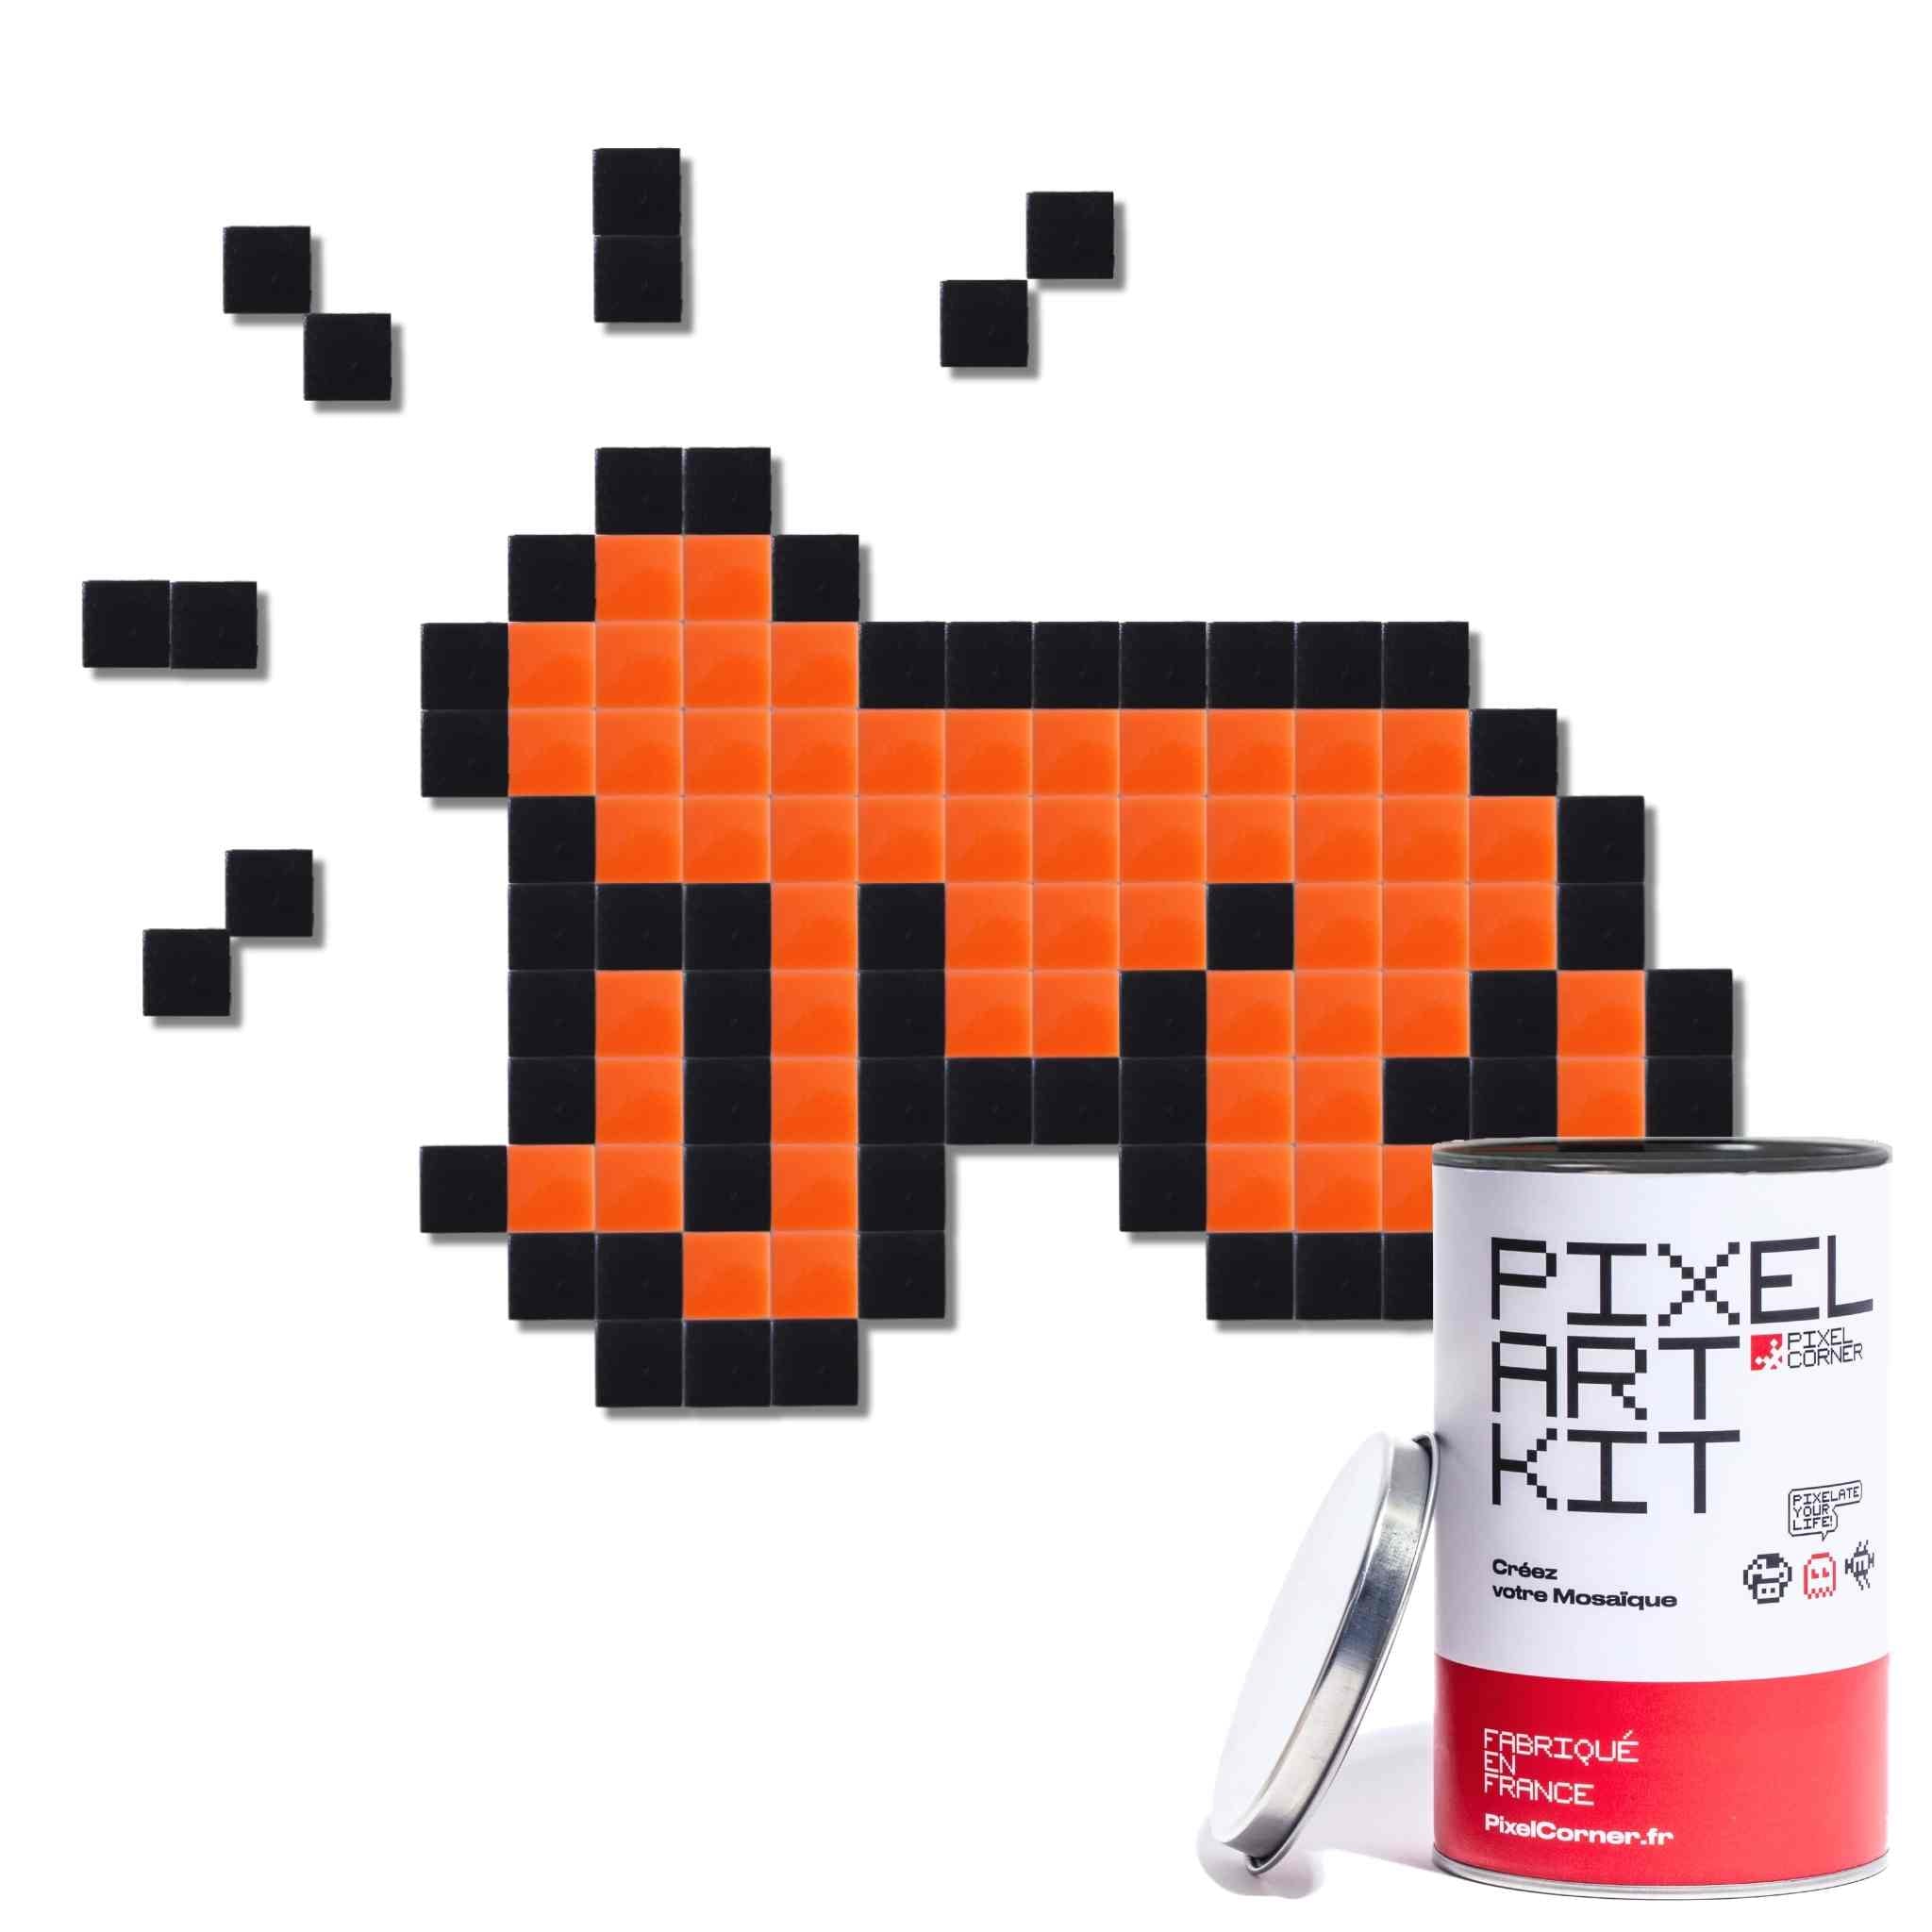 Pixel Art Kit "Baby Kiff" par Pixel Corner - Kits de loisirs créatifs